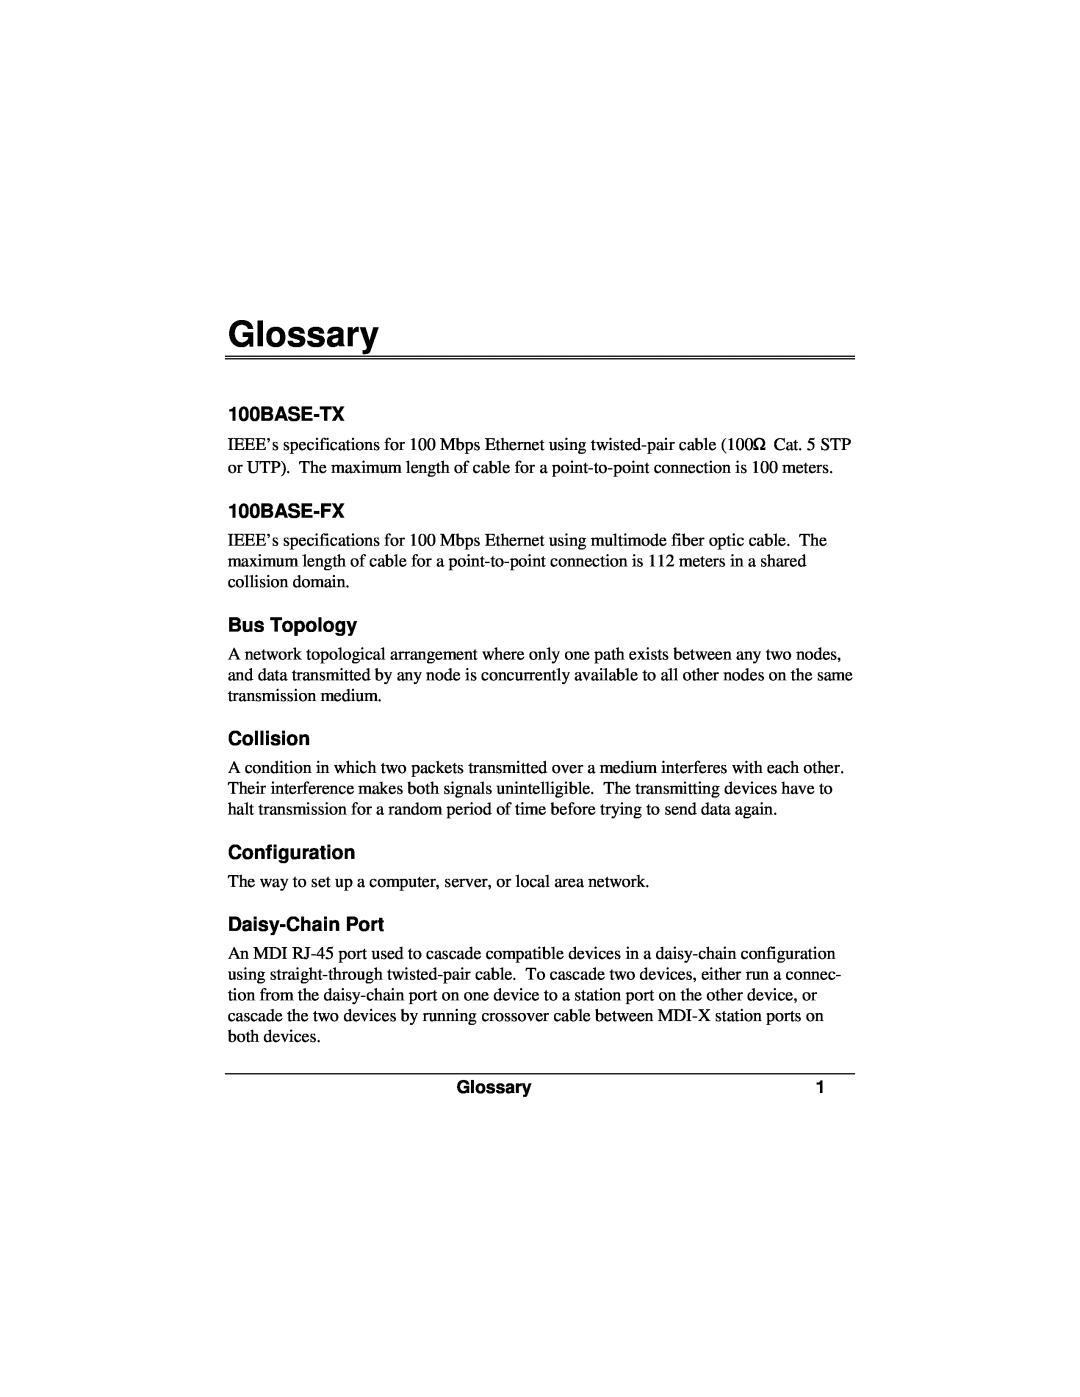 Accton Technology 12se manual Glossary, 100BASE-TX, 100BASE-FX, Bus Topology, Collision, Configuration, Daisy-Chain Port 